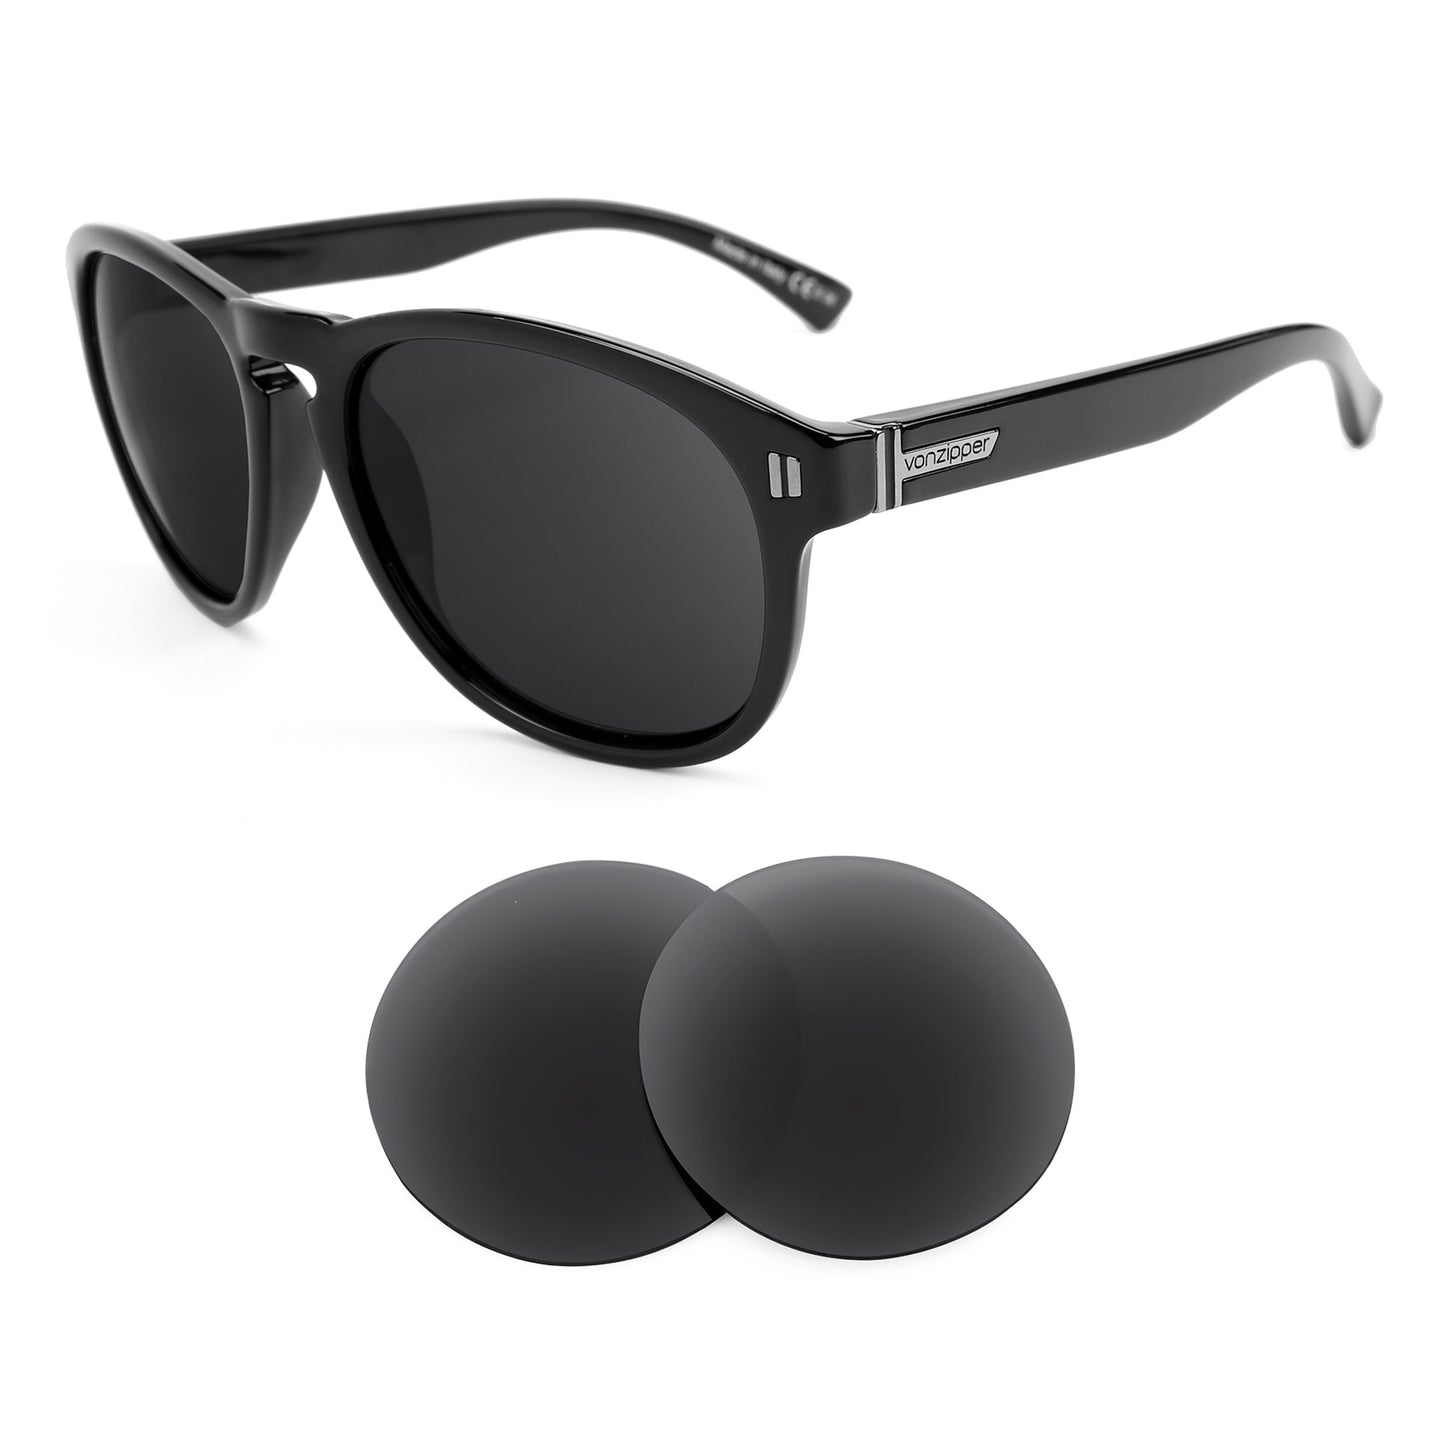 VonZipper Thurston sunglasses with replacement lenses